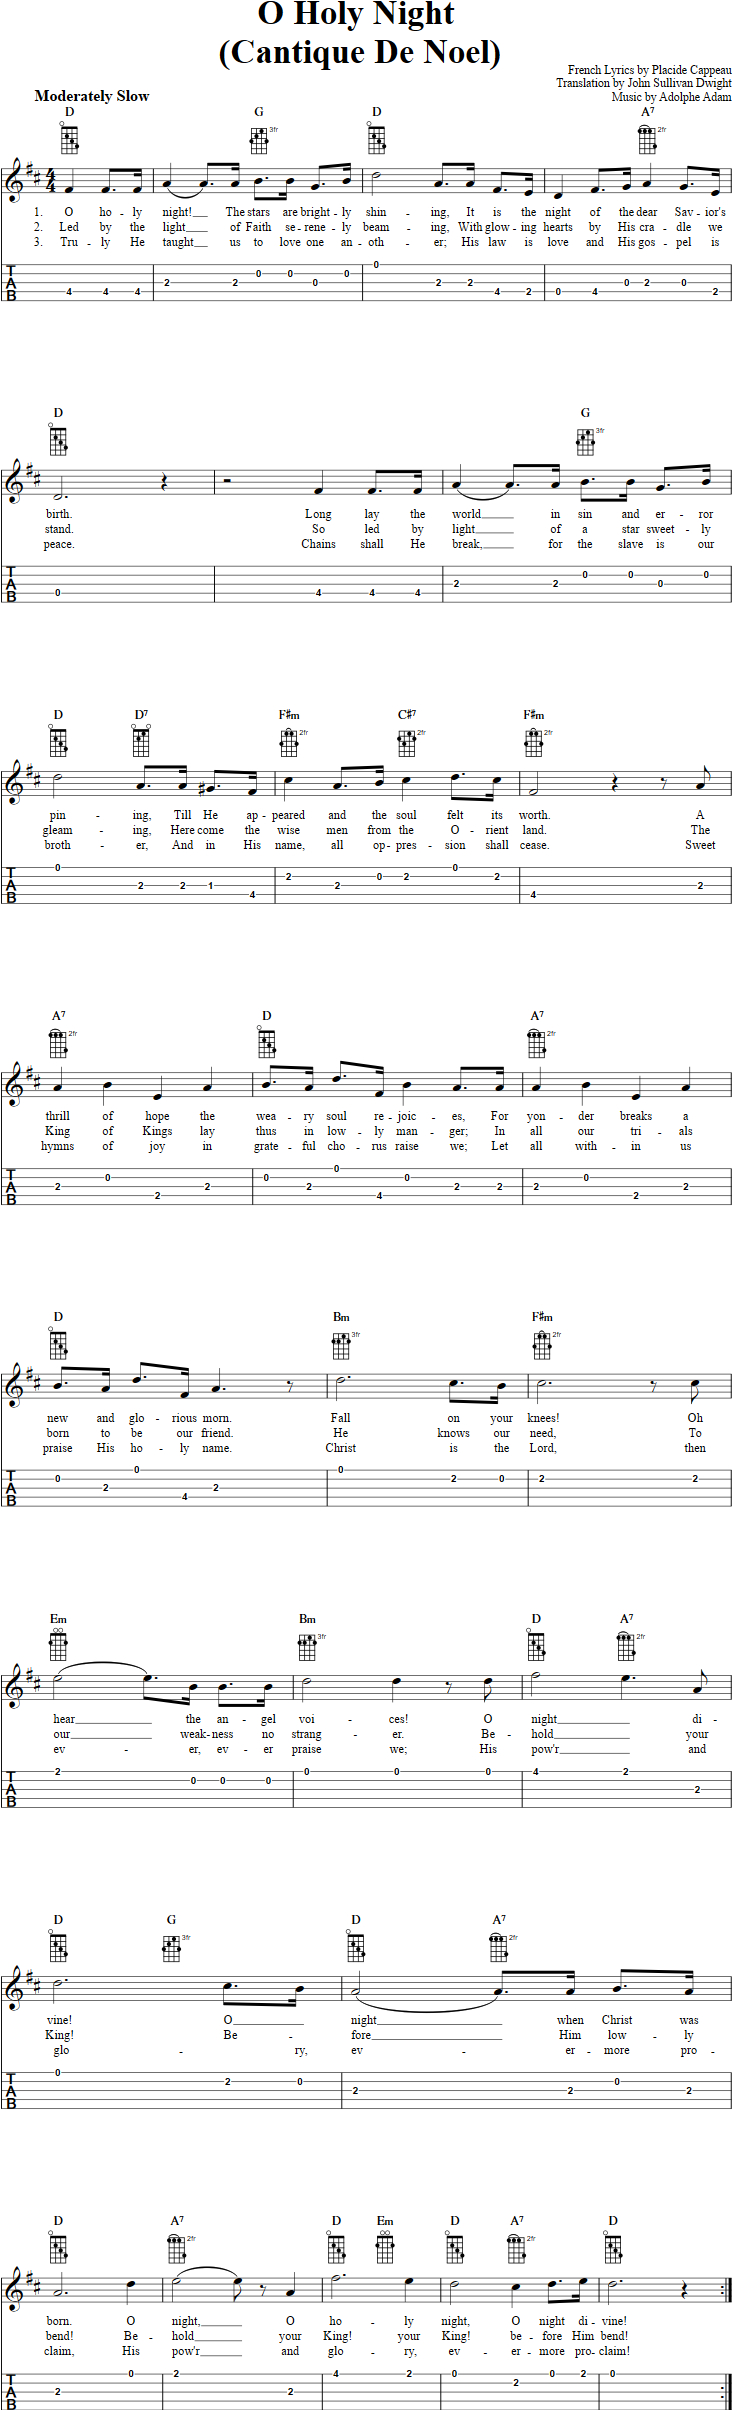 Oh Holy Night Chords O Holy Night Chords Sheet Music And Tab For Banjo With Lyrics